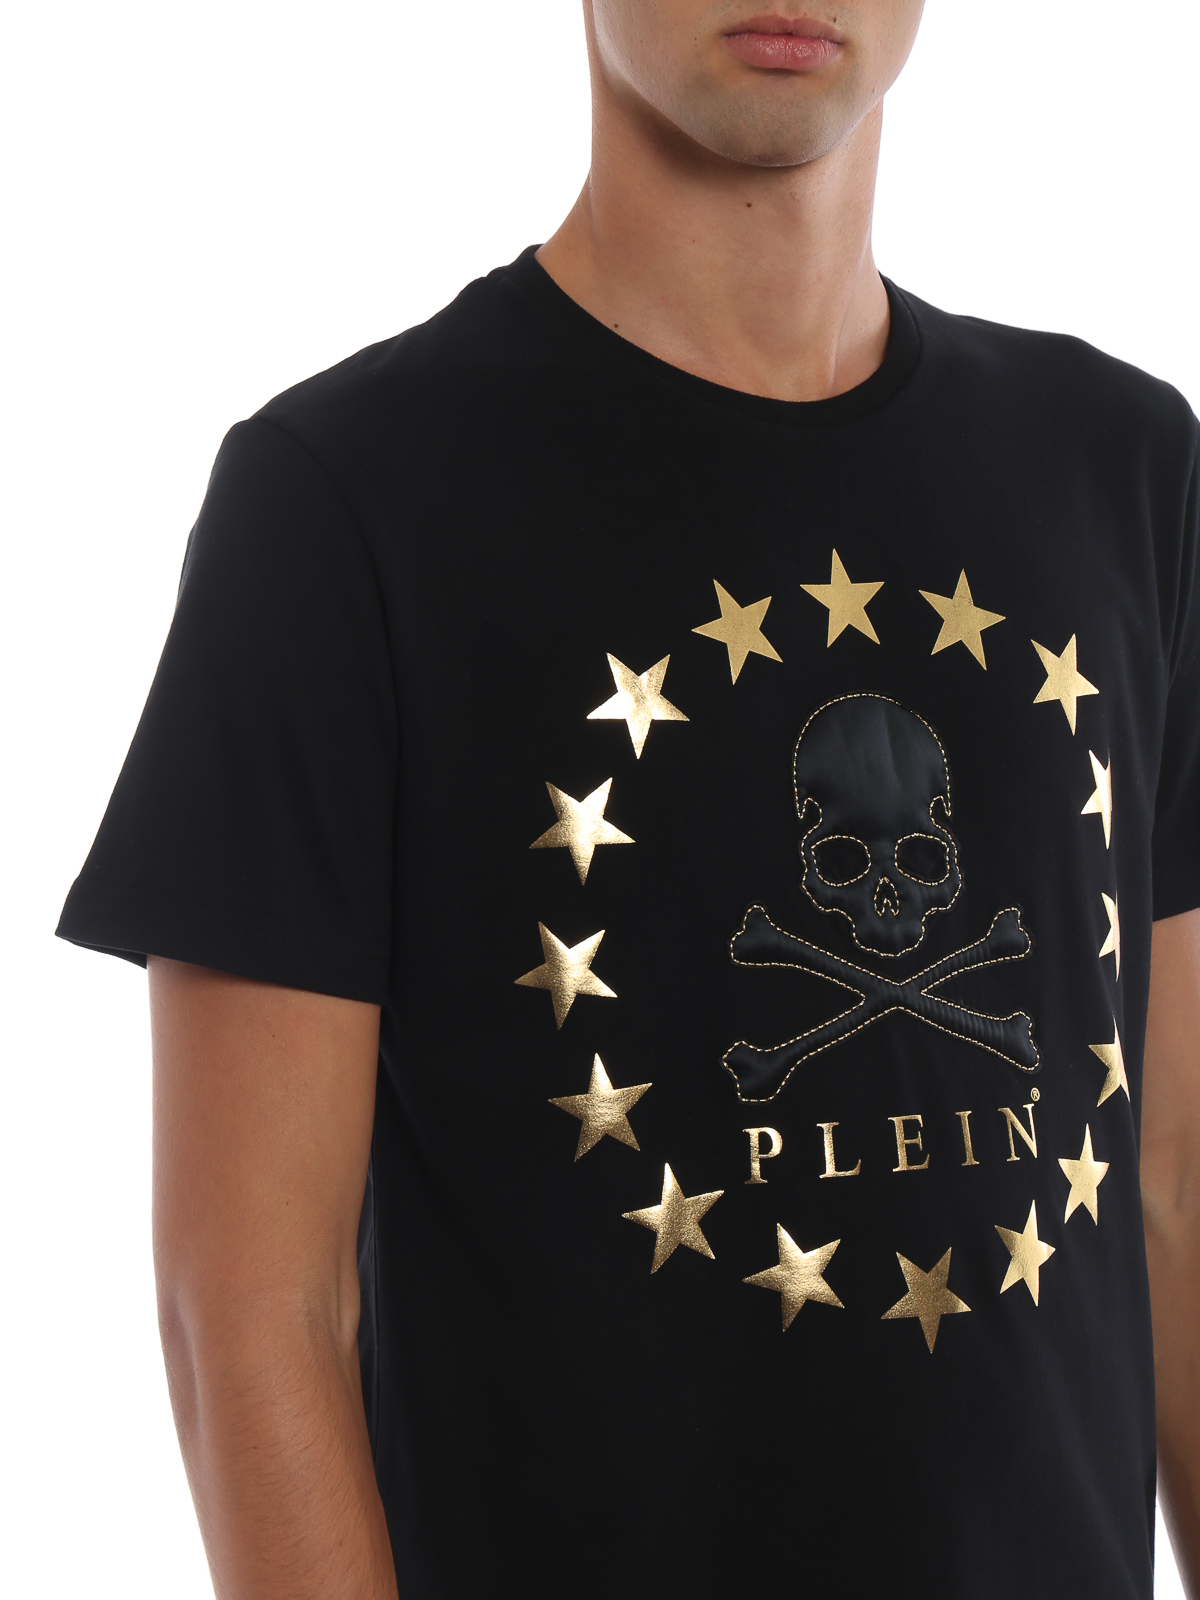 philipp plein gold skull t shirt